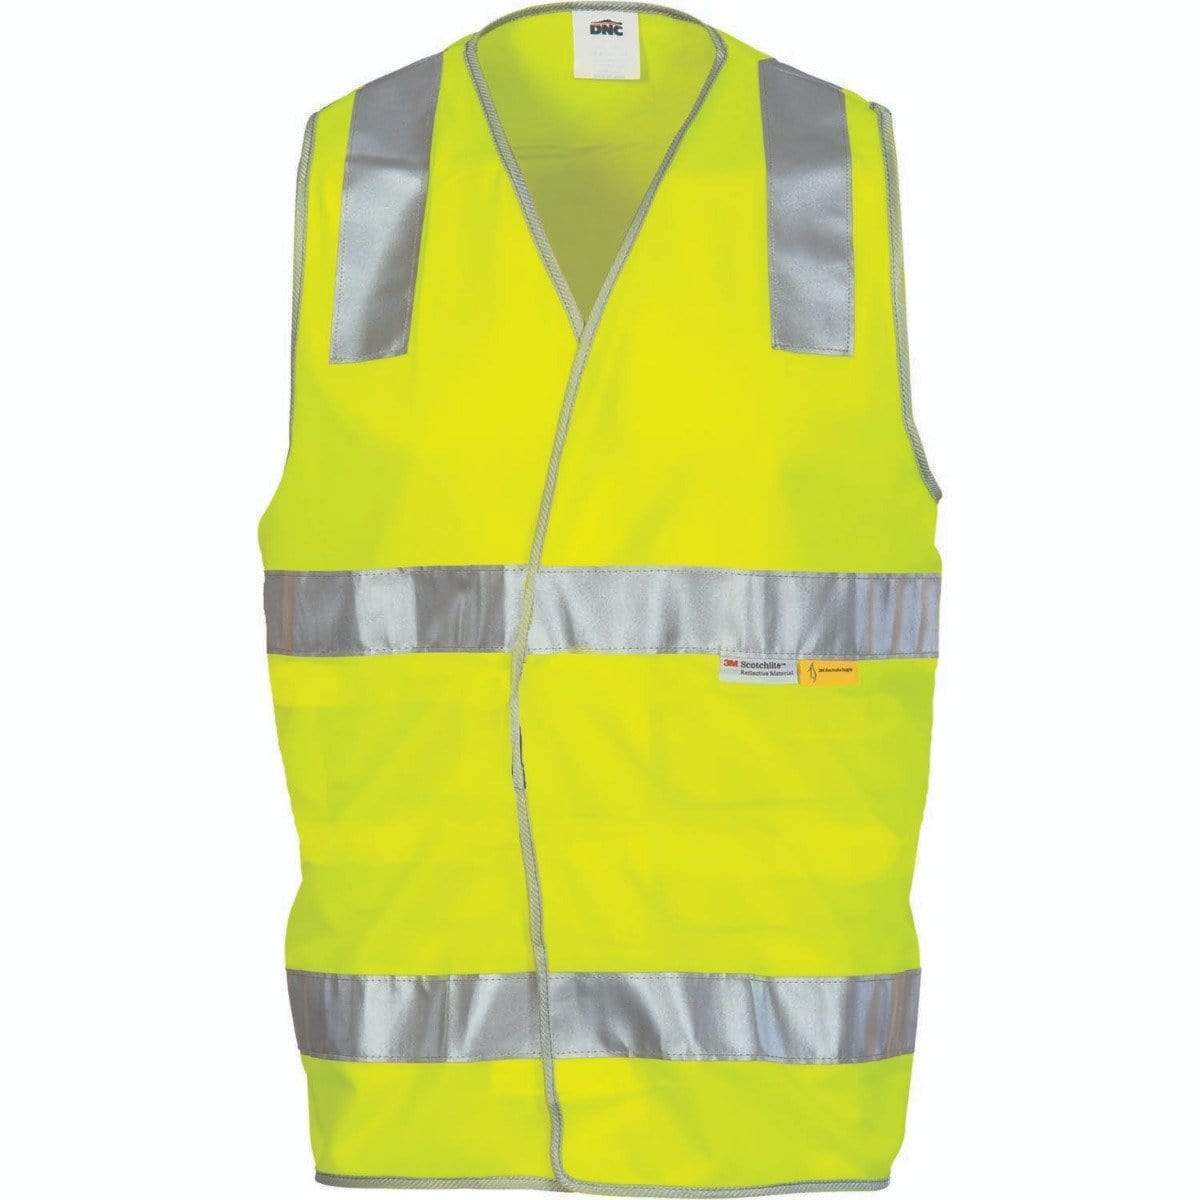 Dnc Workwear Day/night Hi-vis Safety Vest - 3803 Work Wear DNC Workwear Yellow S 